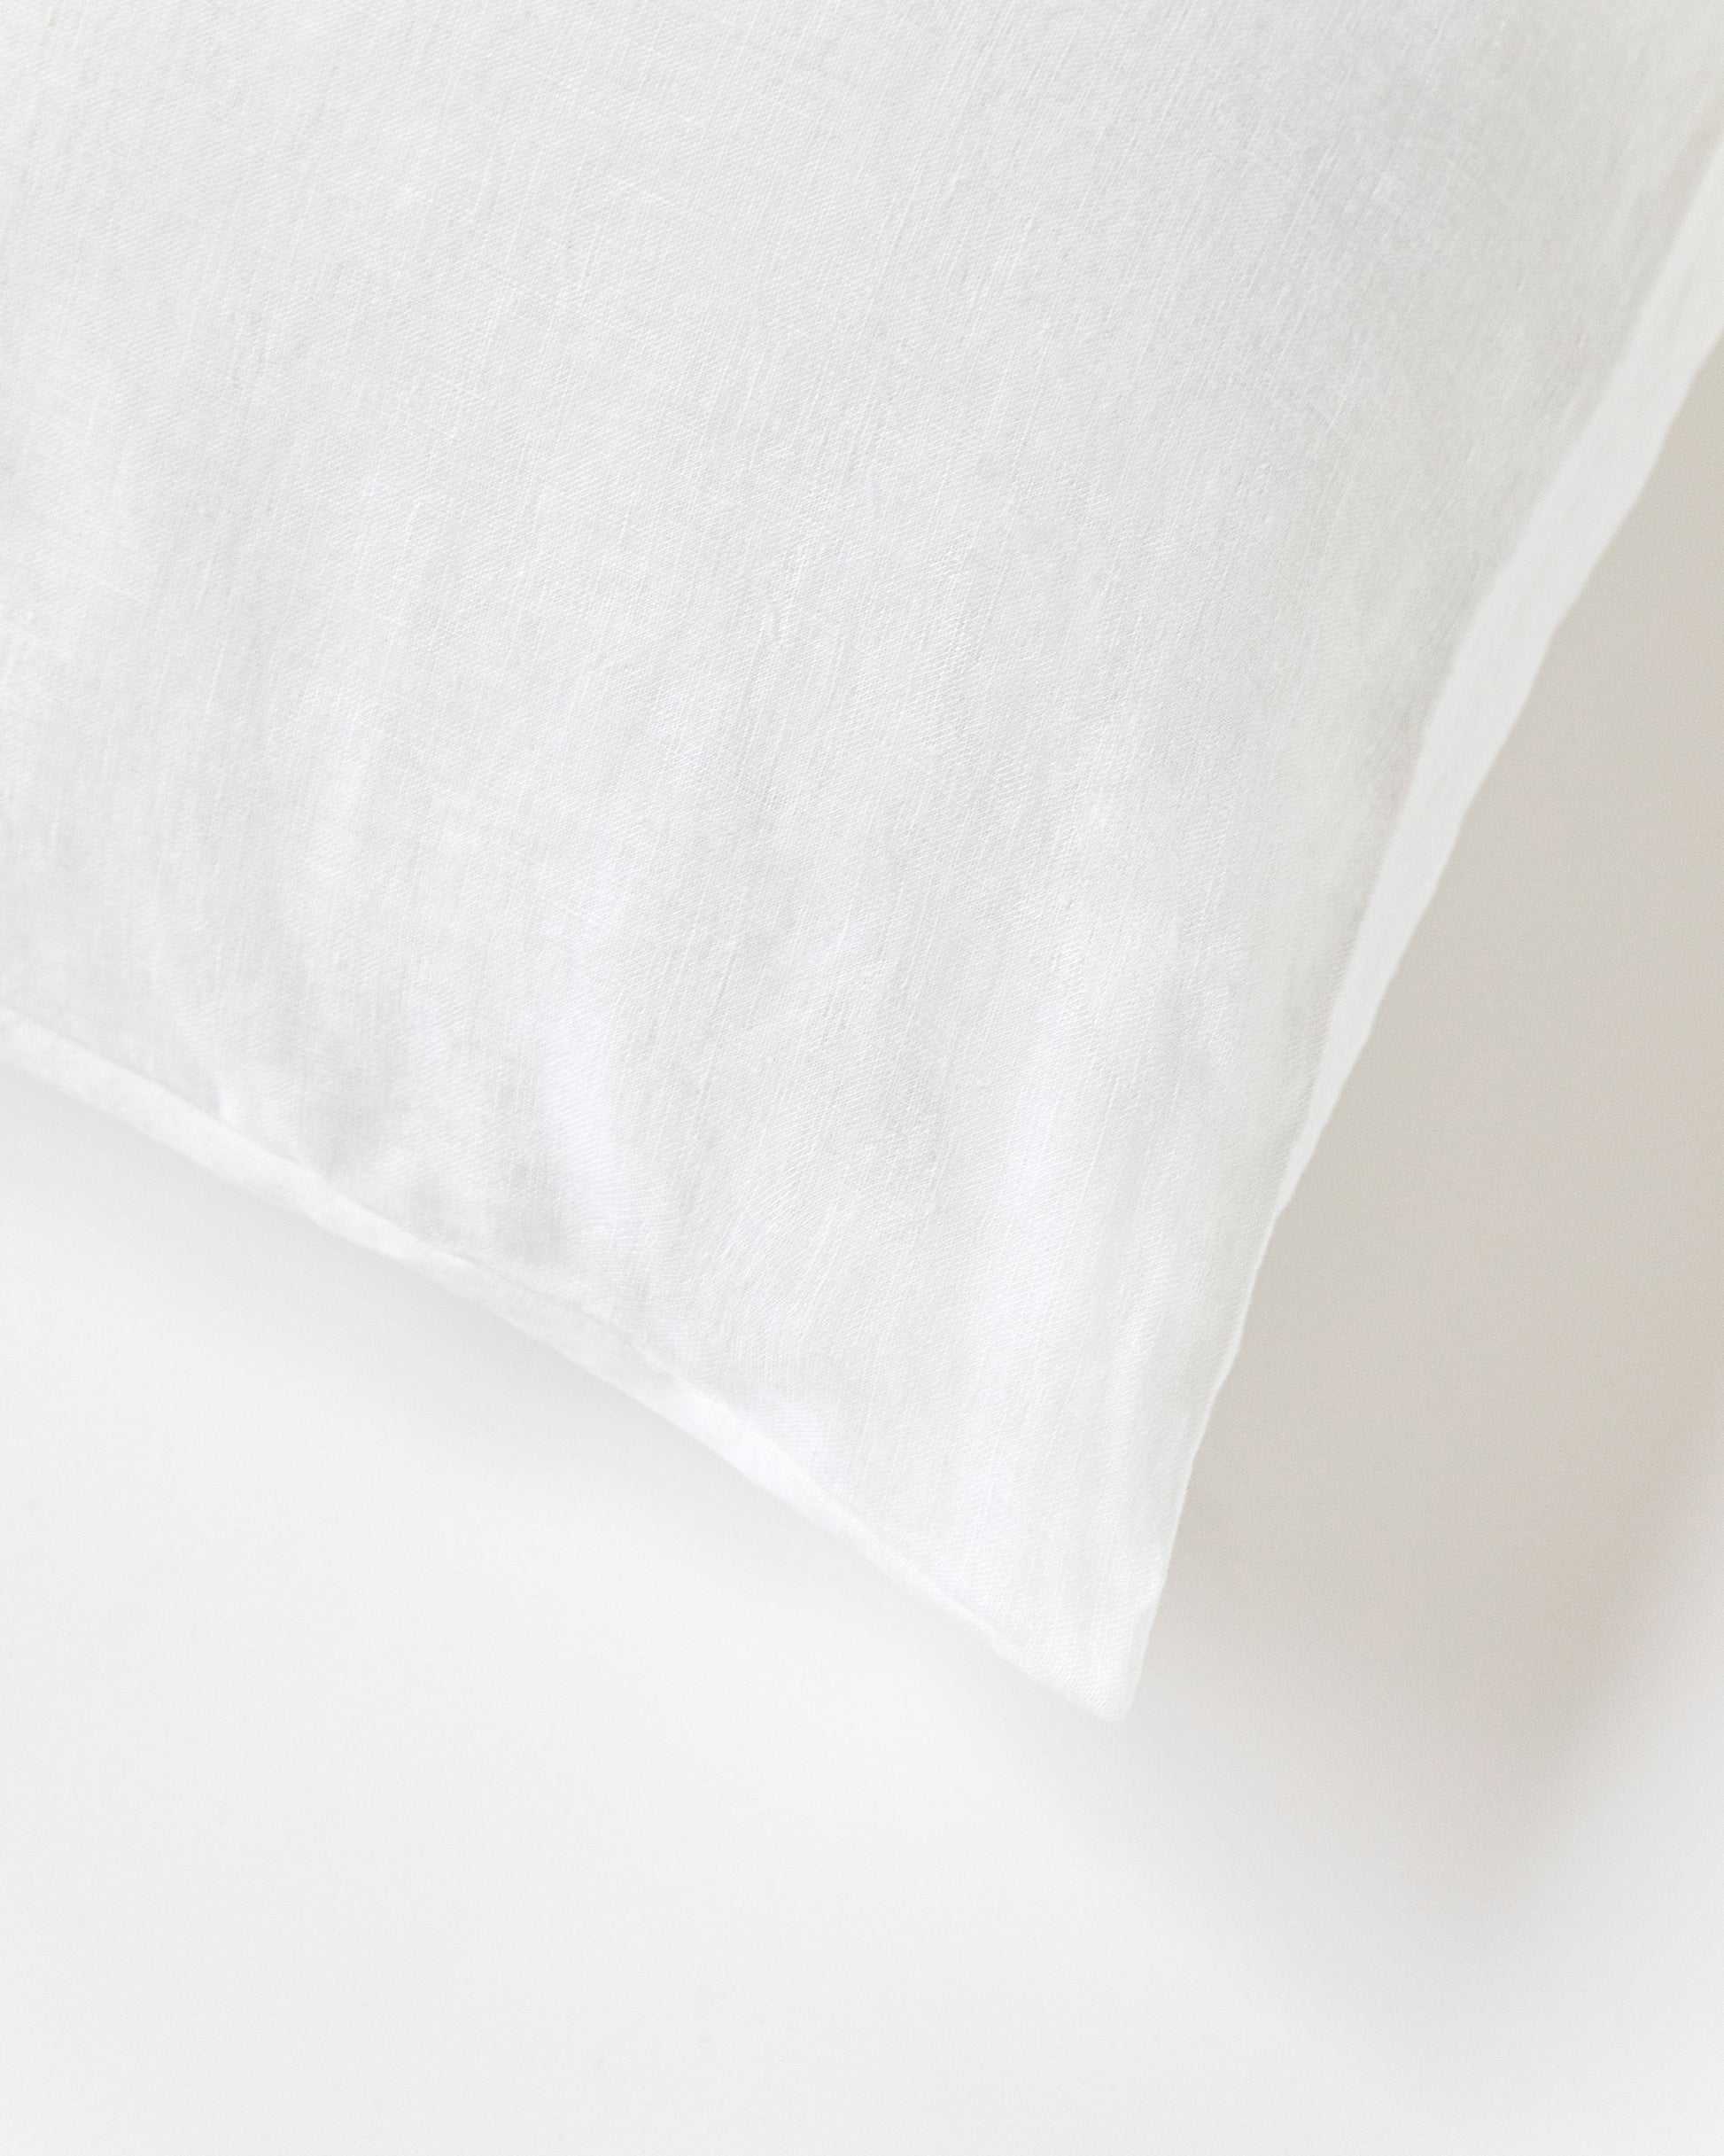 Body pillowcase in White - MagicLinen